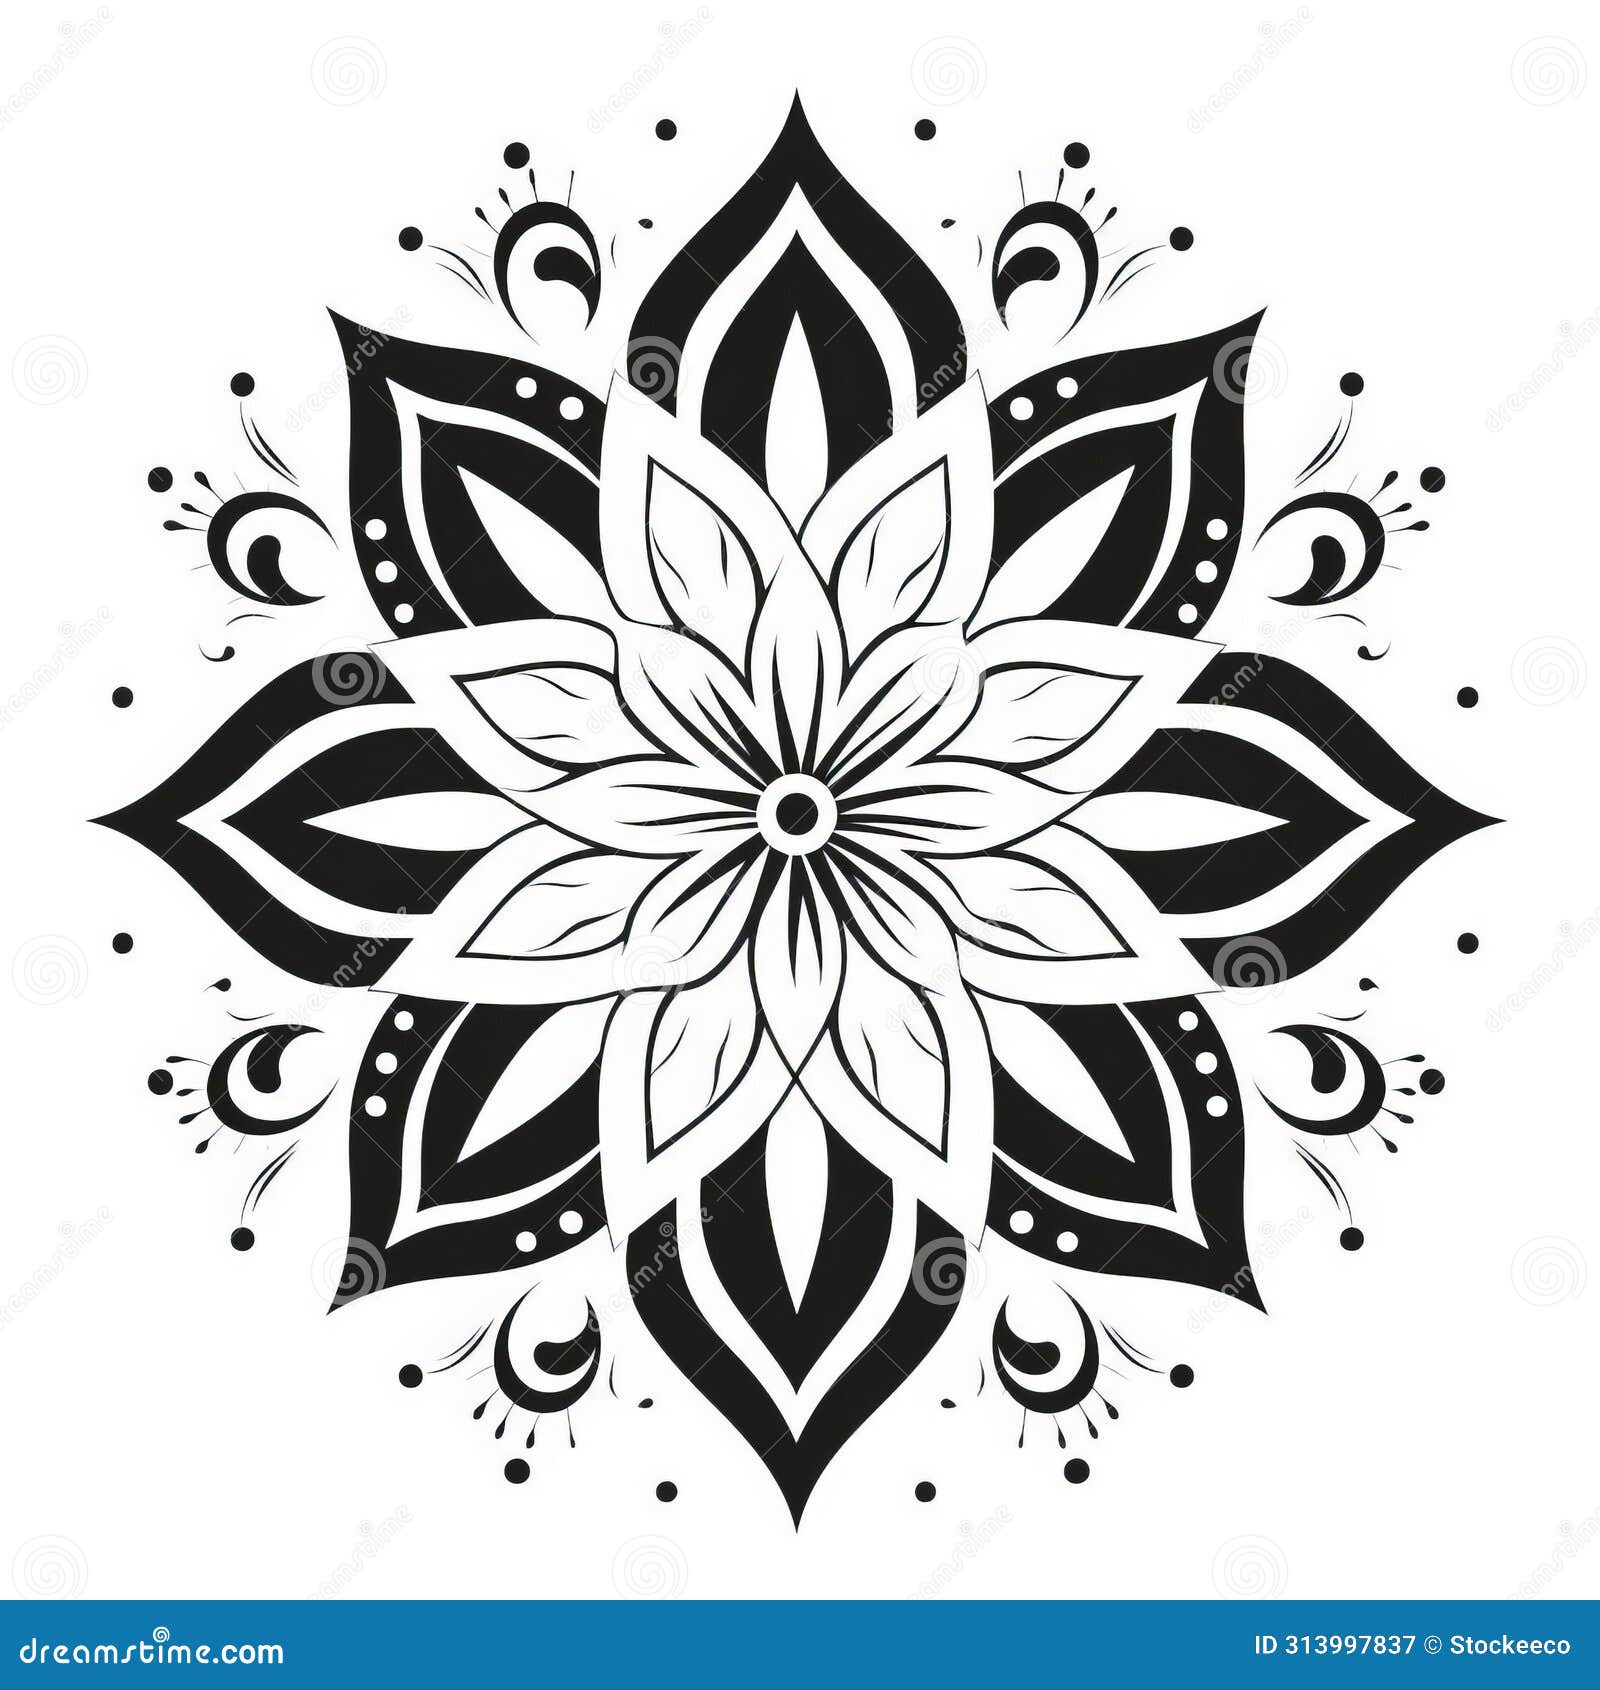 minimalistic mandalas mujer icon pattern on white background